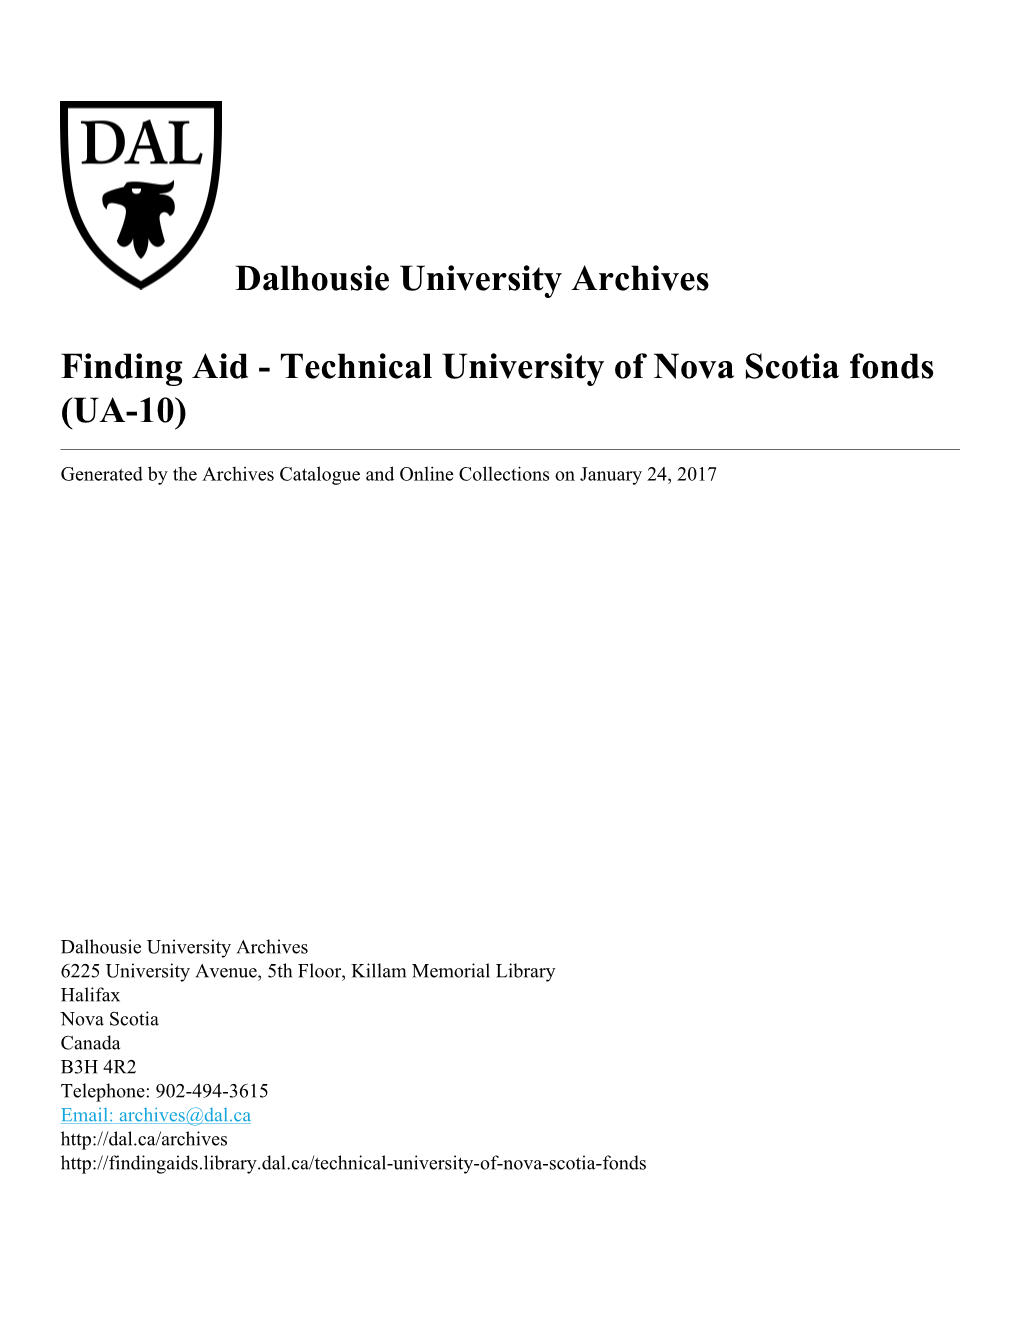 Technical University of Nova Scotia Fonds (UA-10)